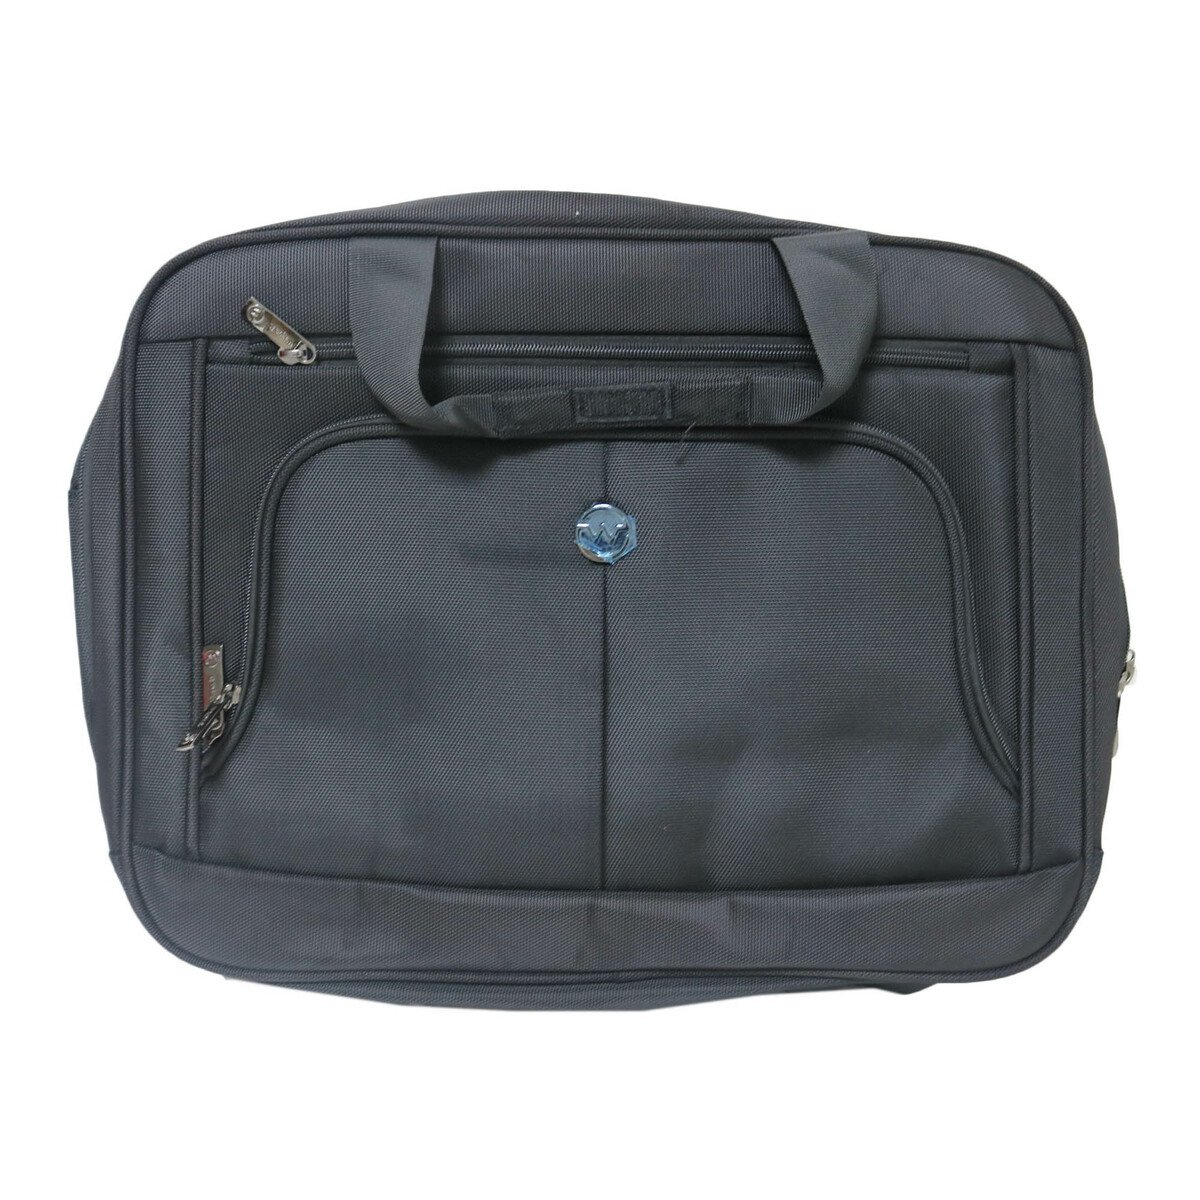 Wagon-R  Laptop Bag 17in LB1630